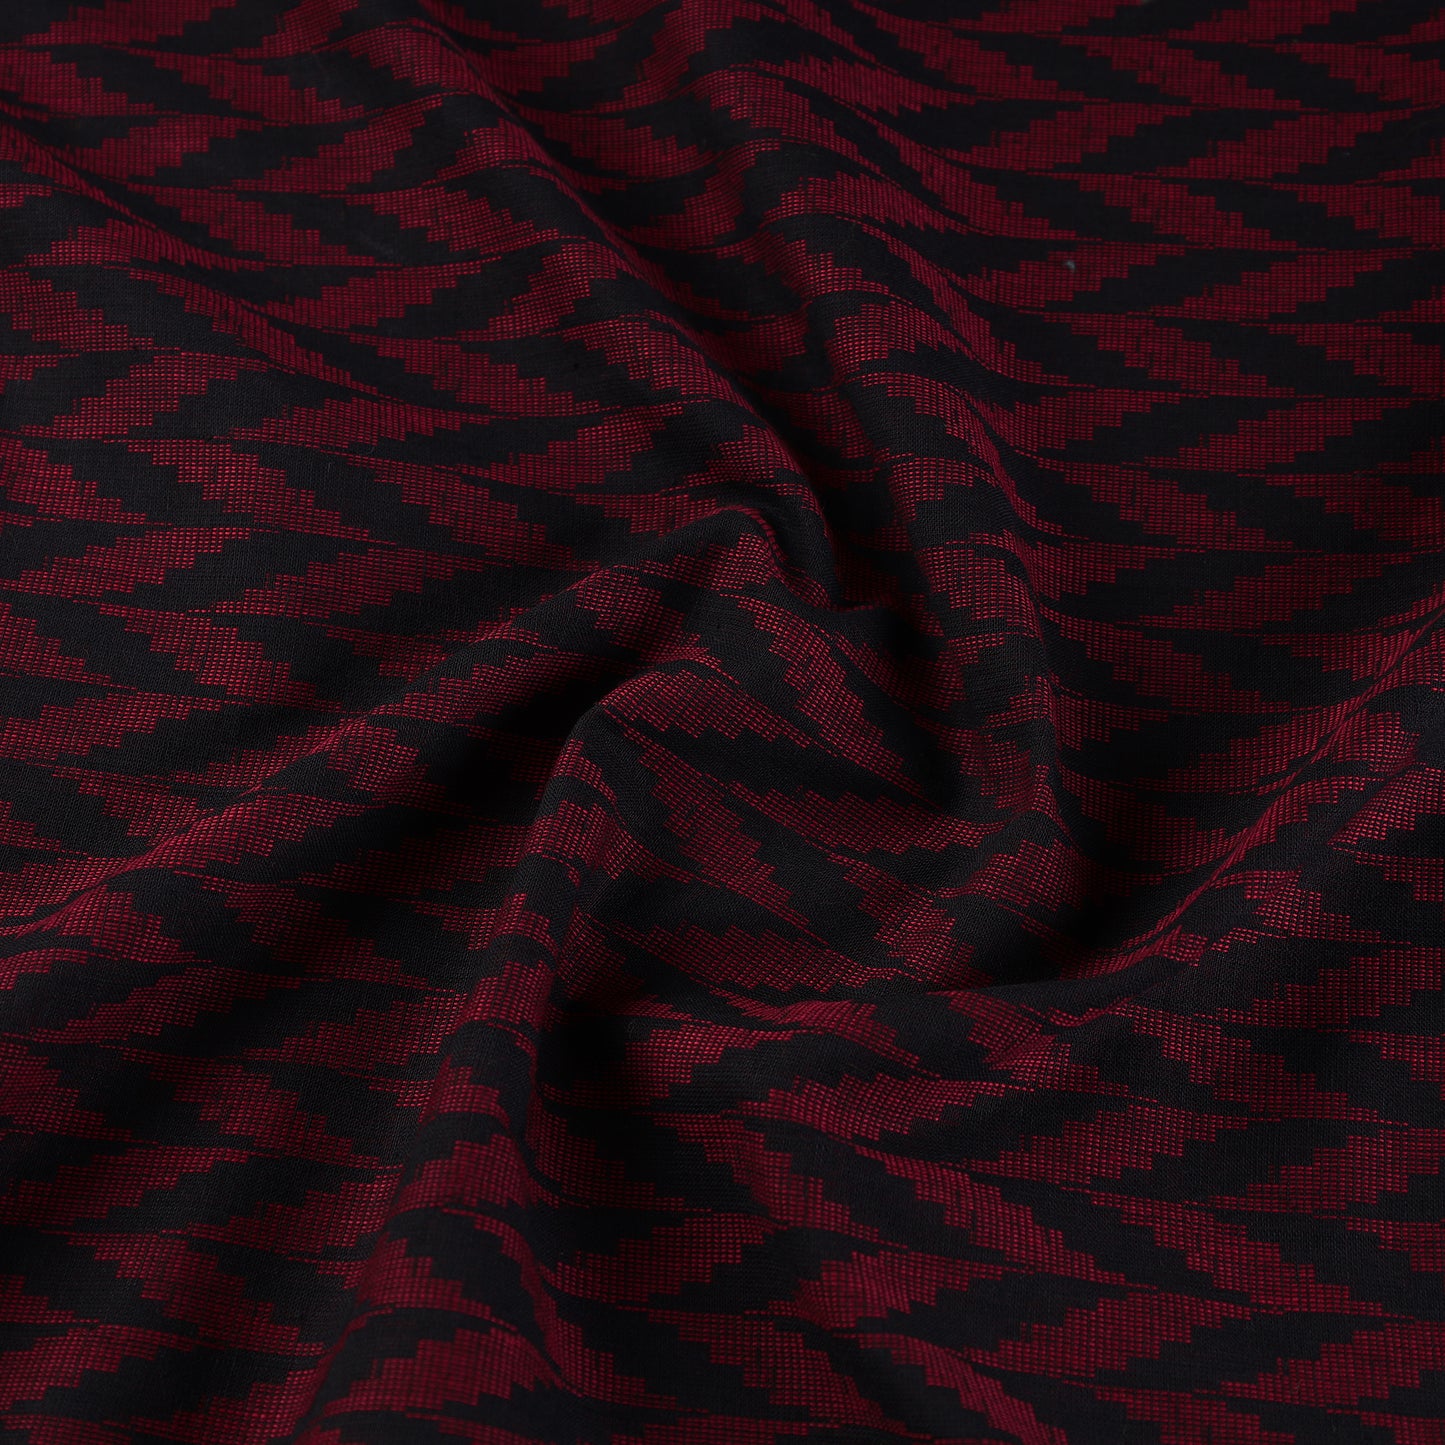 Maroon - Jacquard Prewashed Cotton Fabric 02